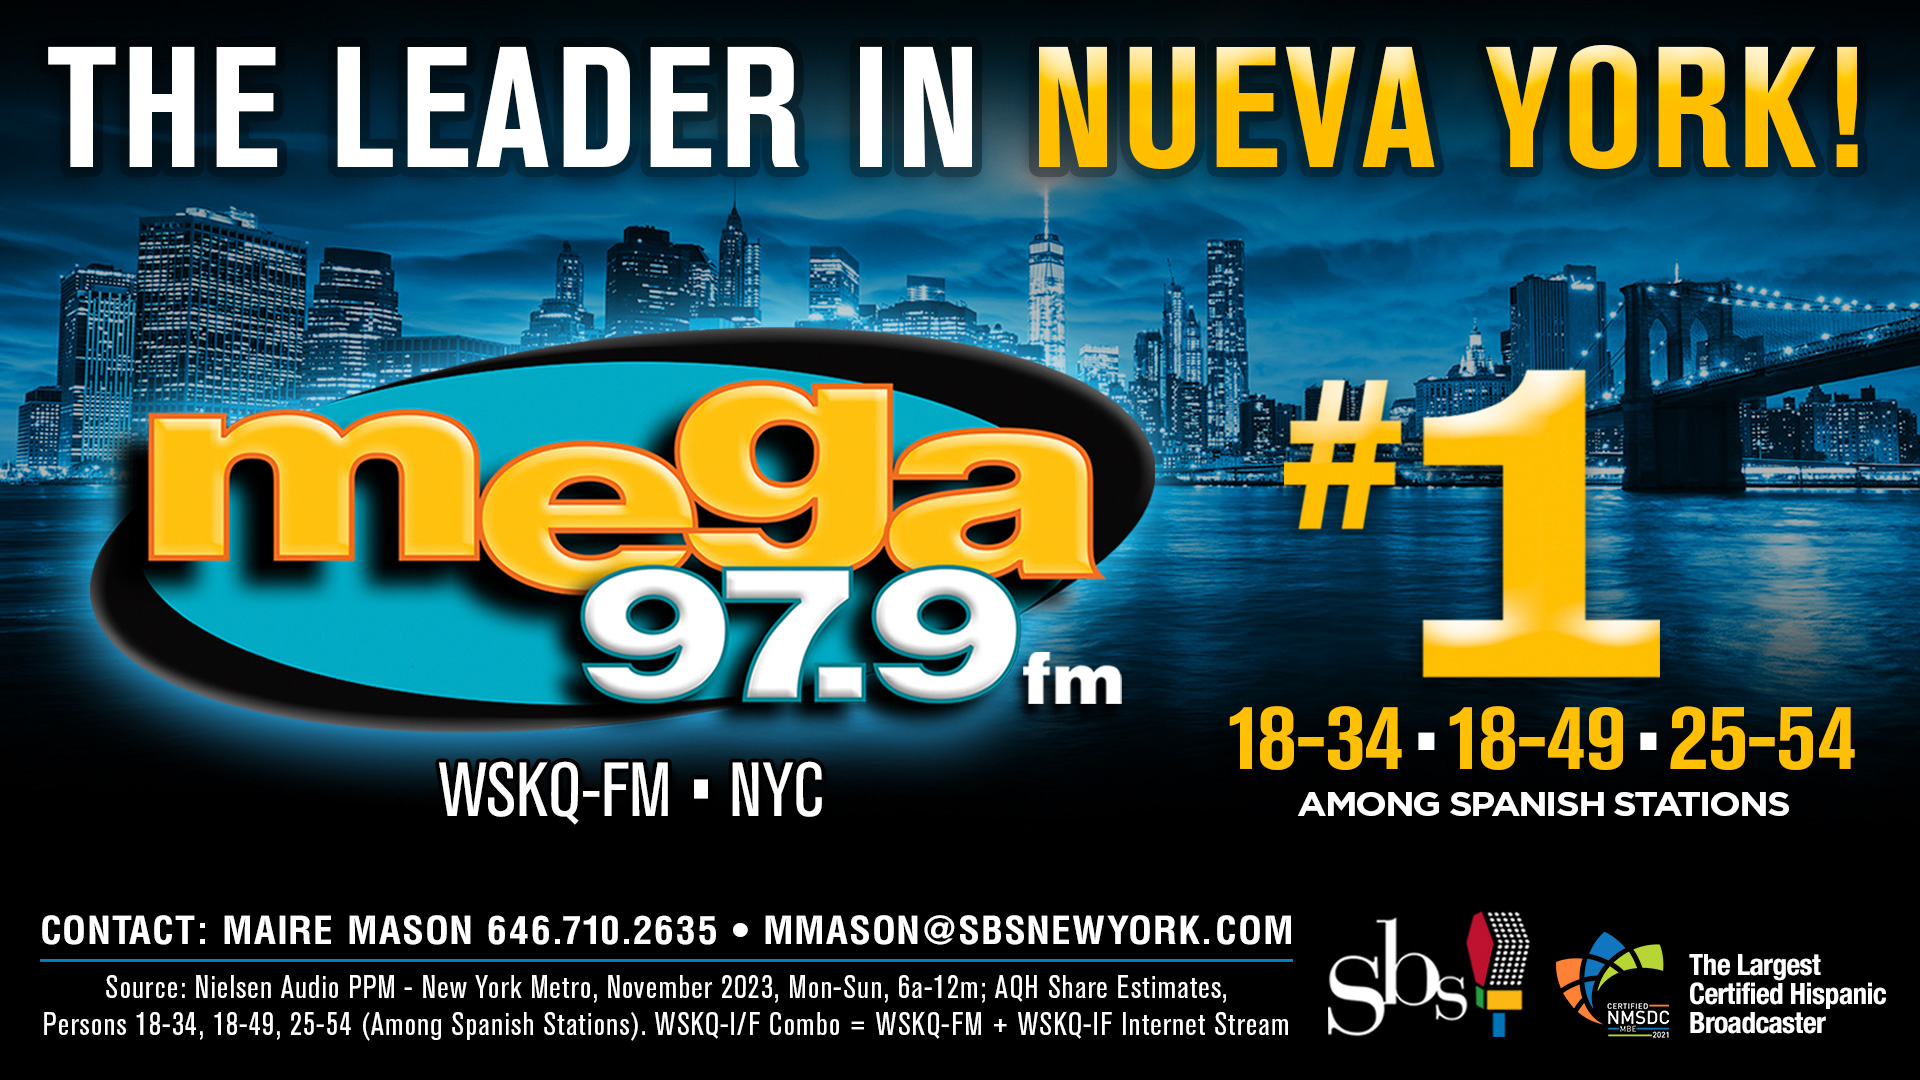 WSKQ-FM, The Leader in Nueva York!